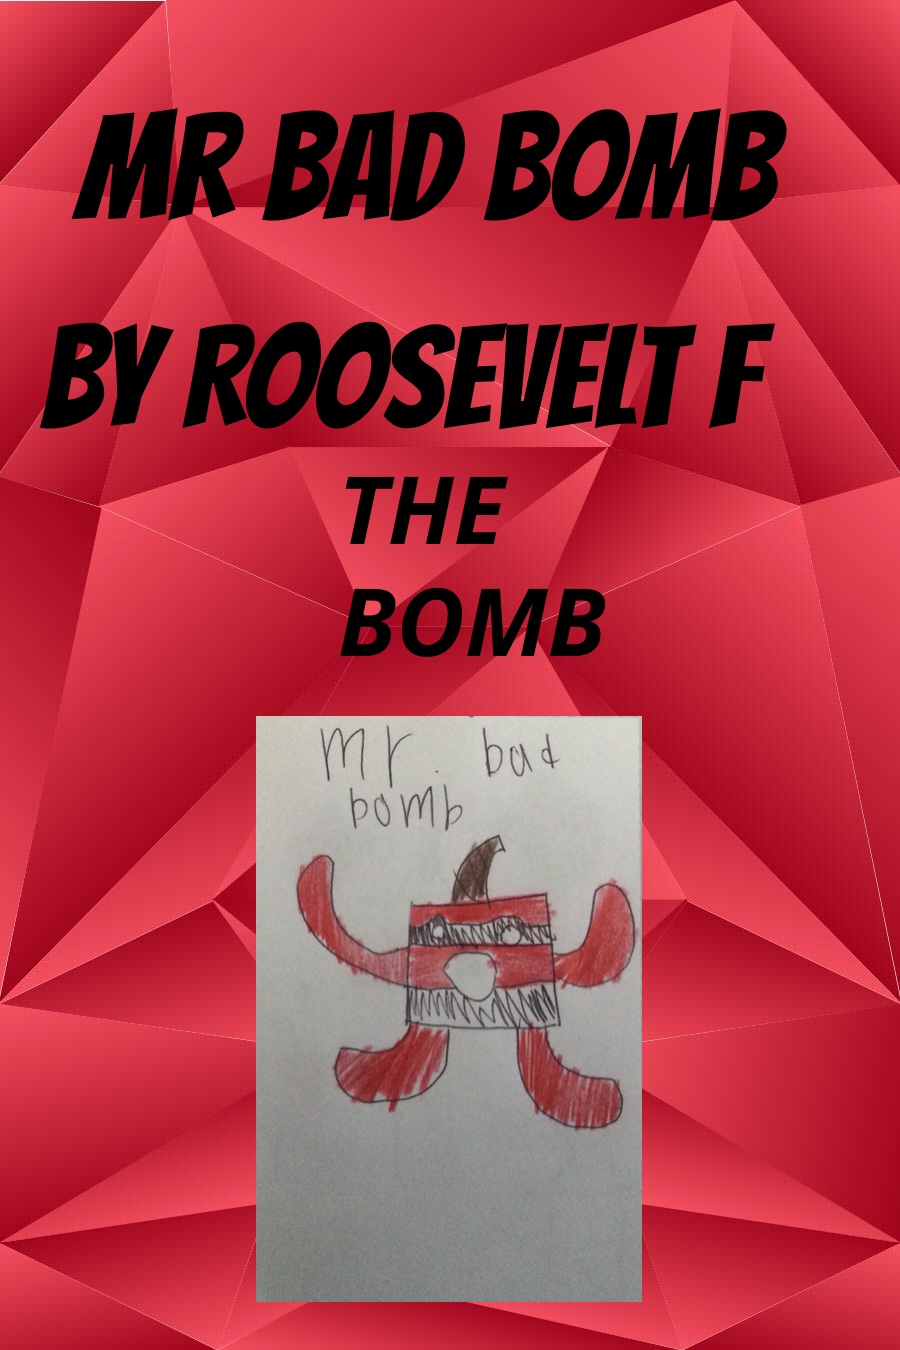 Mr Bad Bomb by Roosevelt F